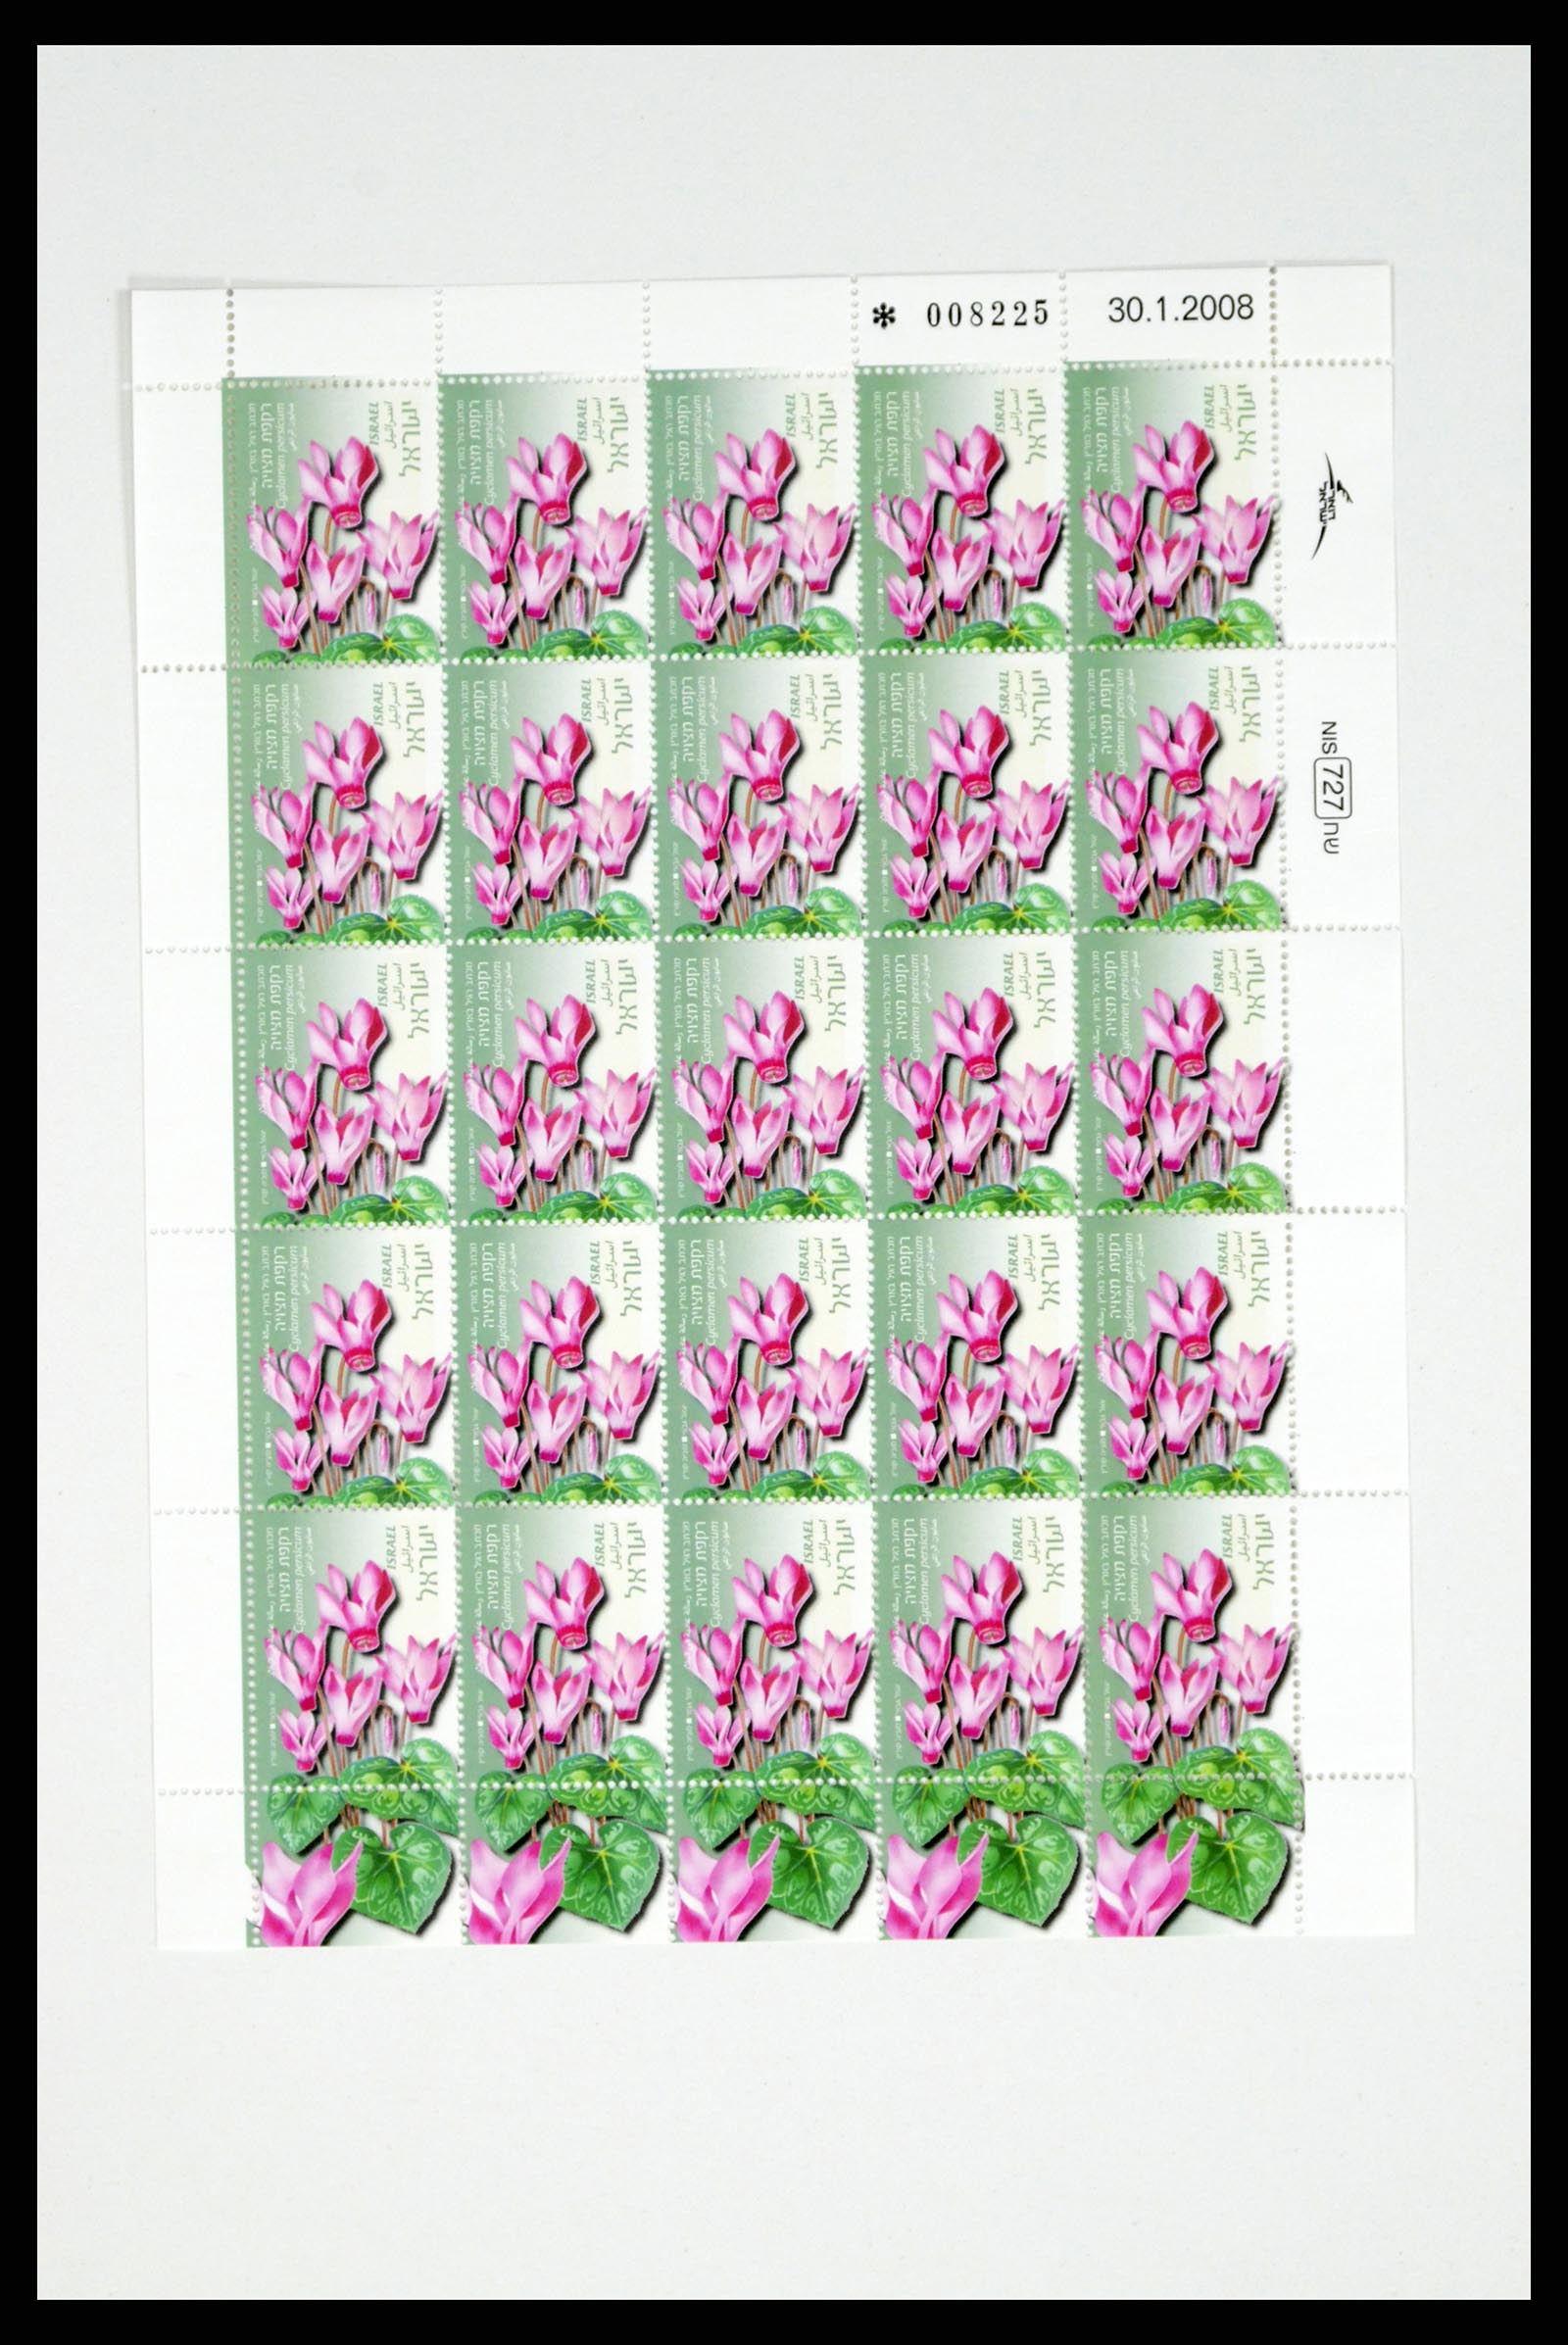 37779 089 - Stamp collection 37779 Israel sheetlets 1986-2009.